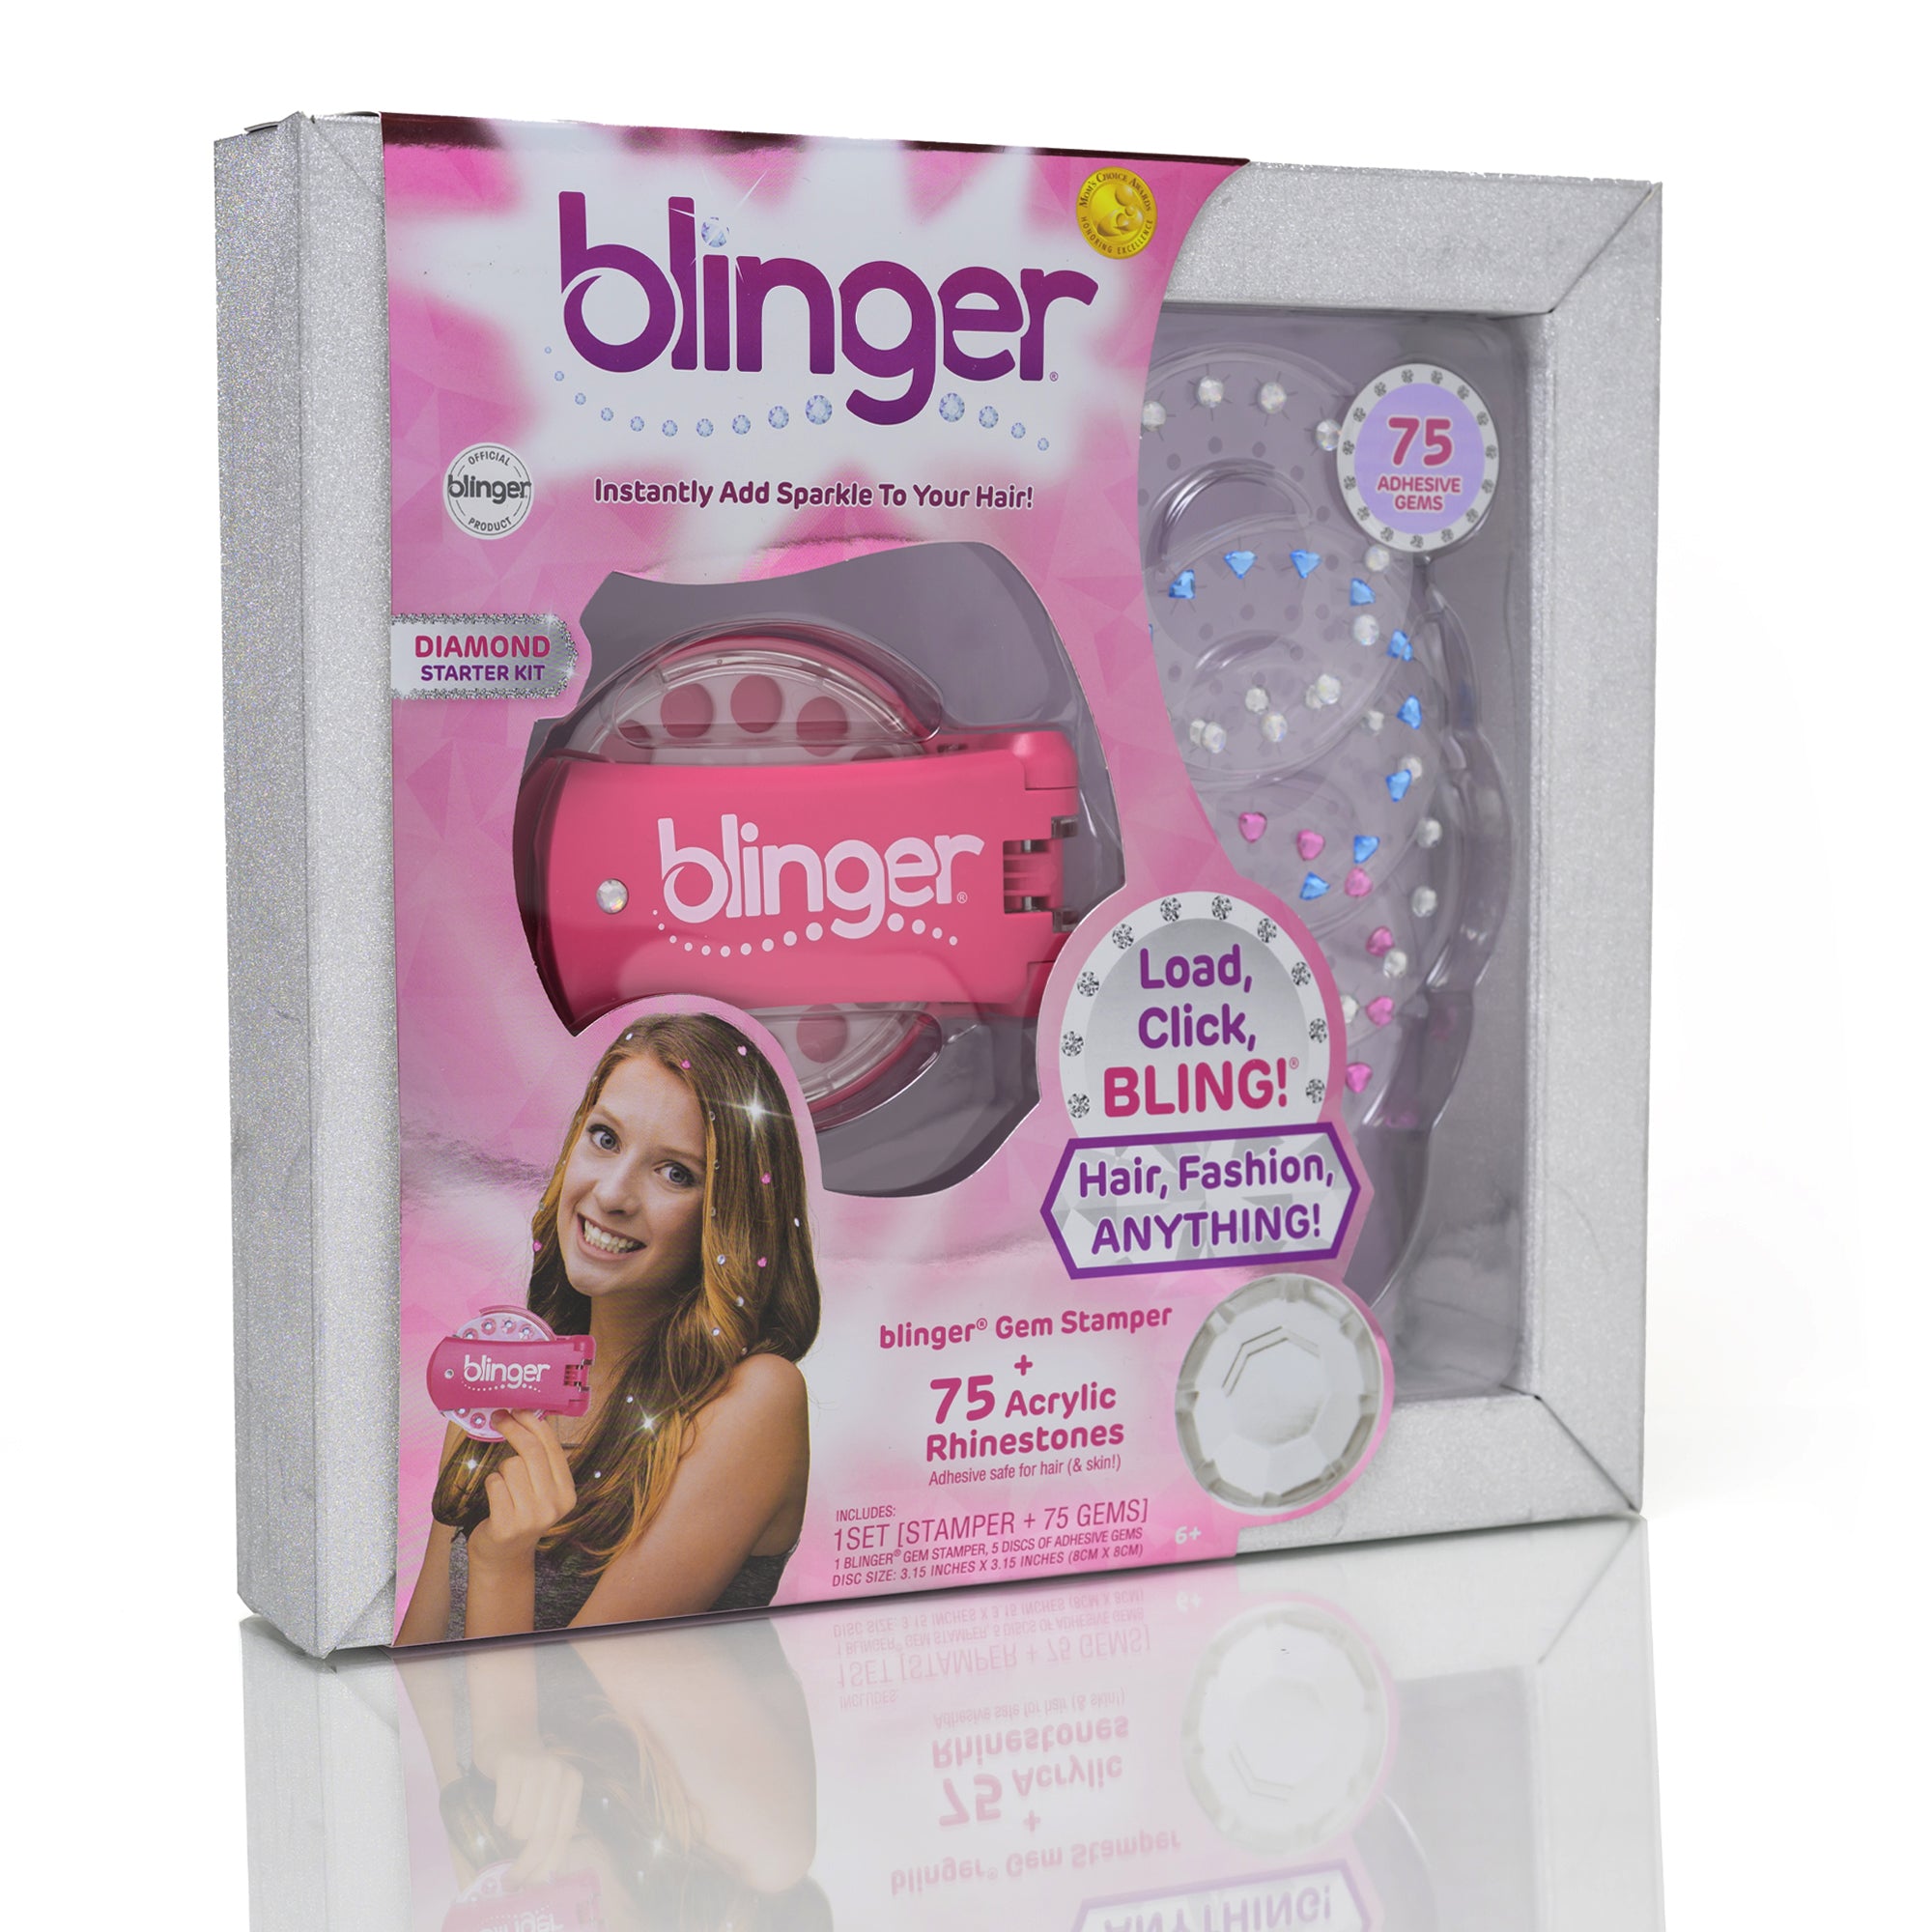 blinger® Diamond Collection Starter Kit with blinger® Gem Stamper + 75 Colorful Acrylic Rhinestones